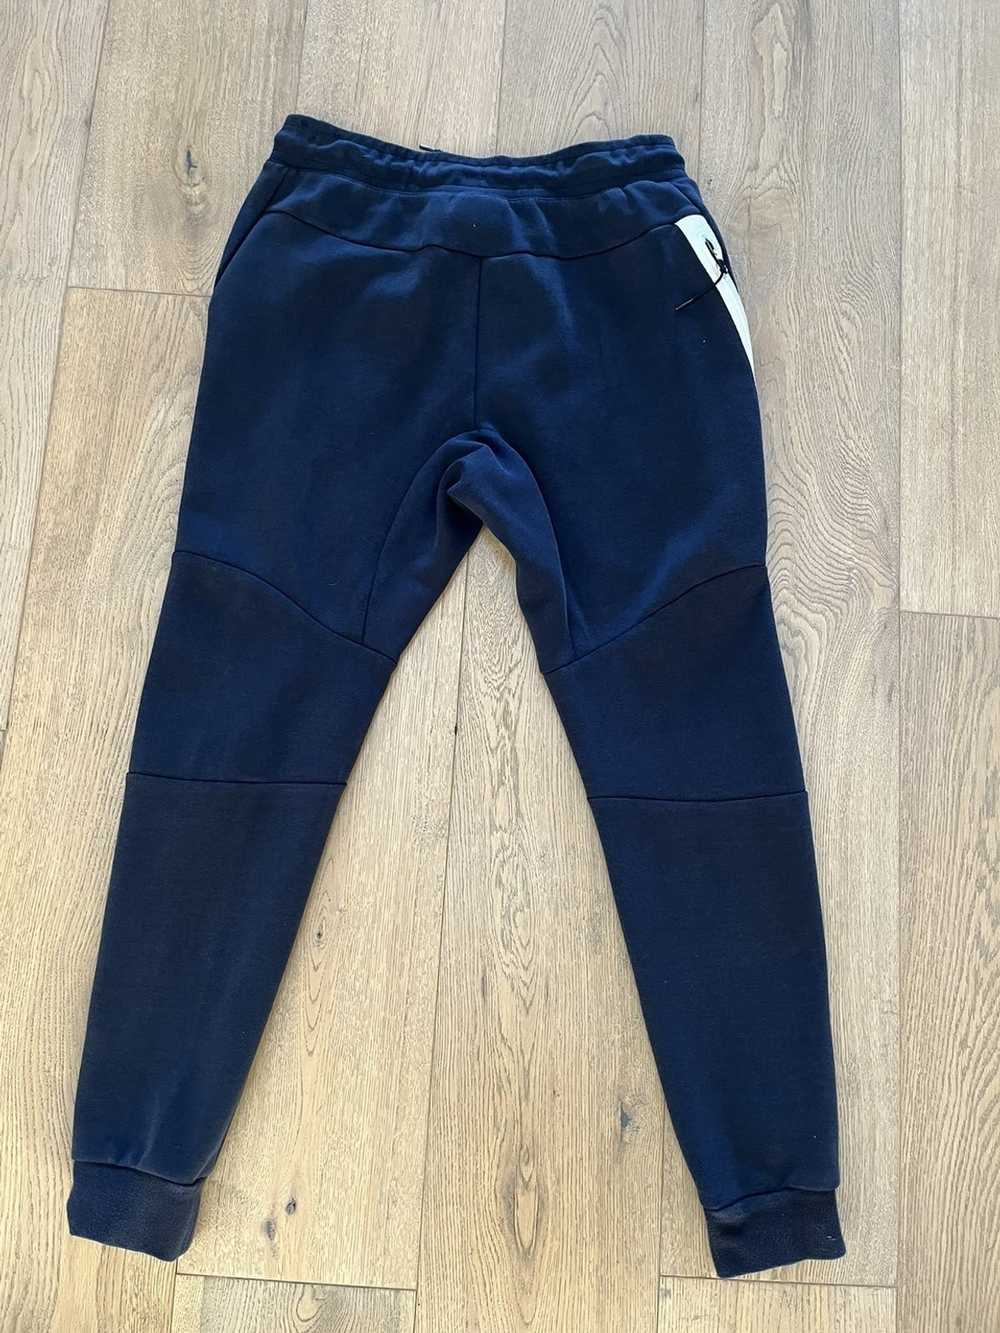 Nike Men’s Tech Fleece Pants - image 4